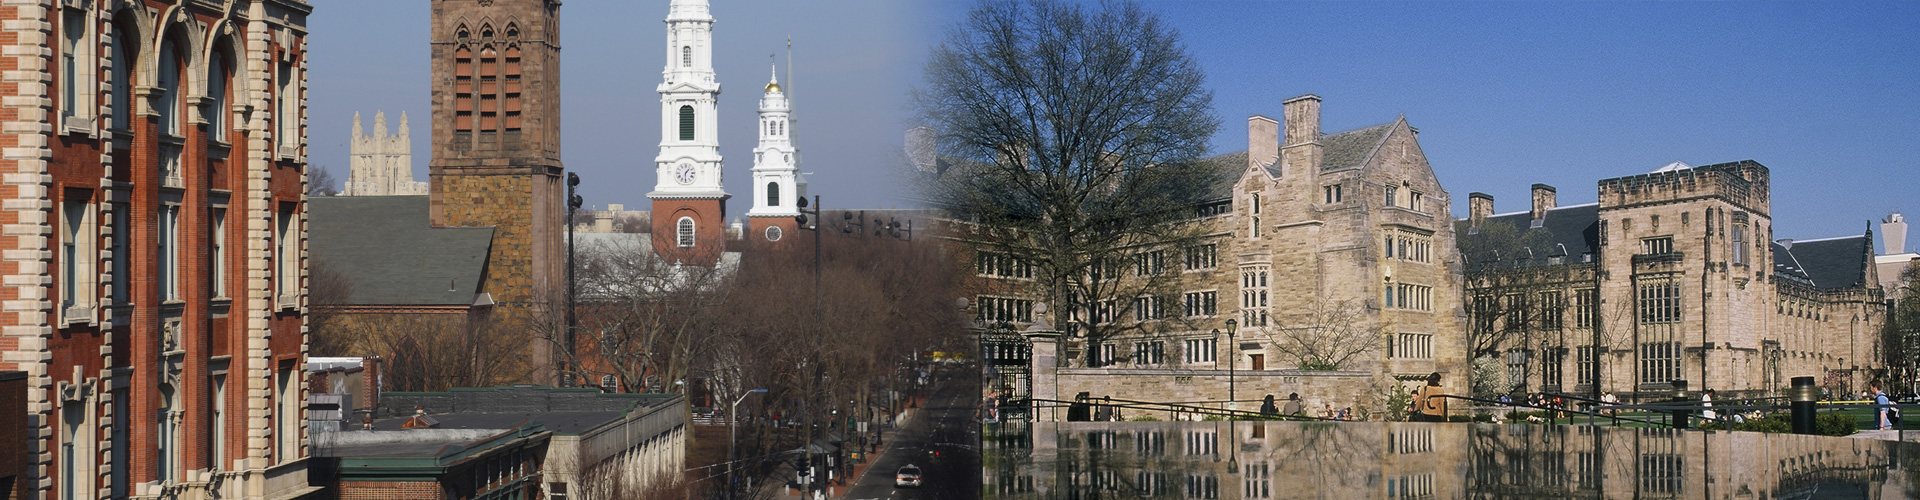 New Haven CT / Yale University